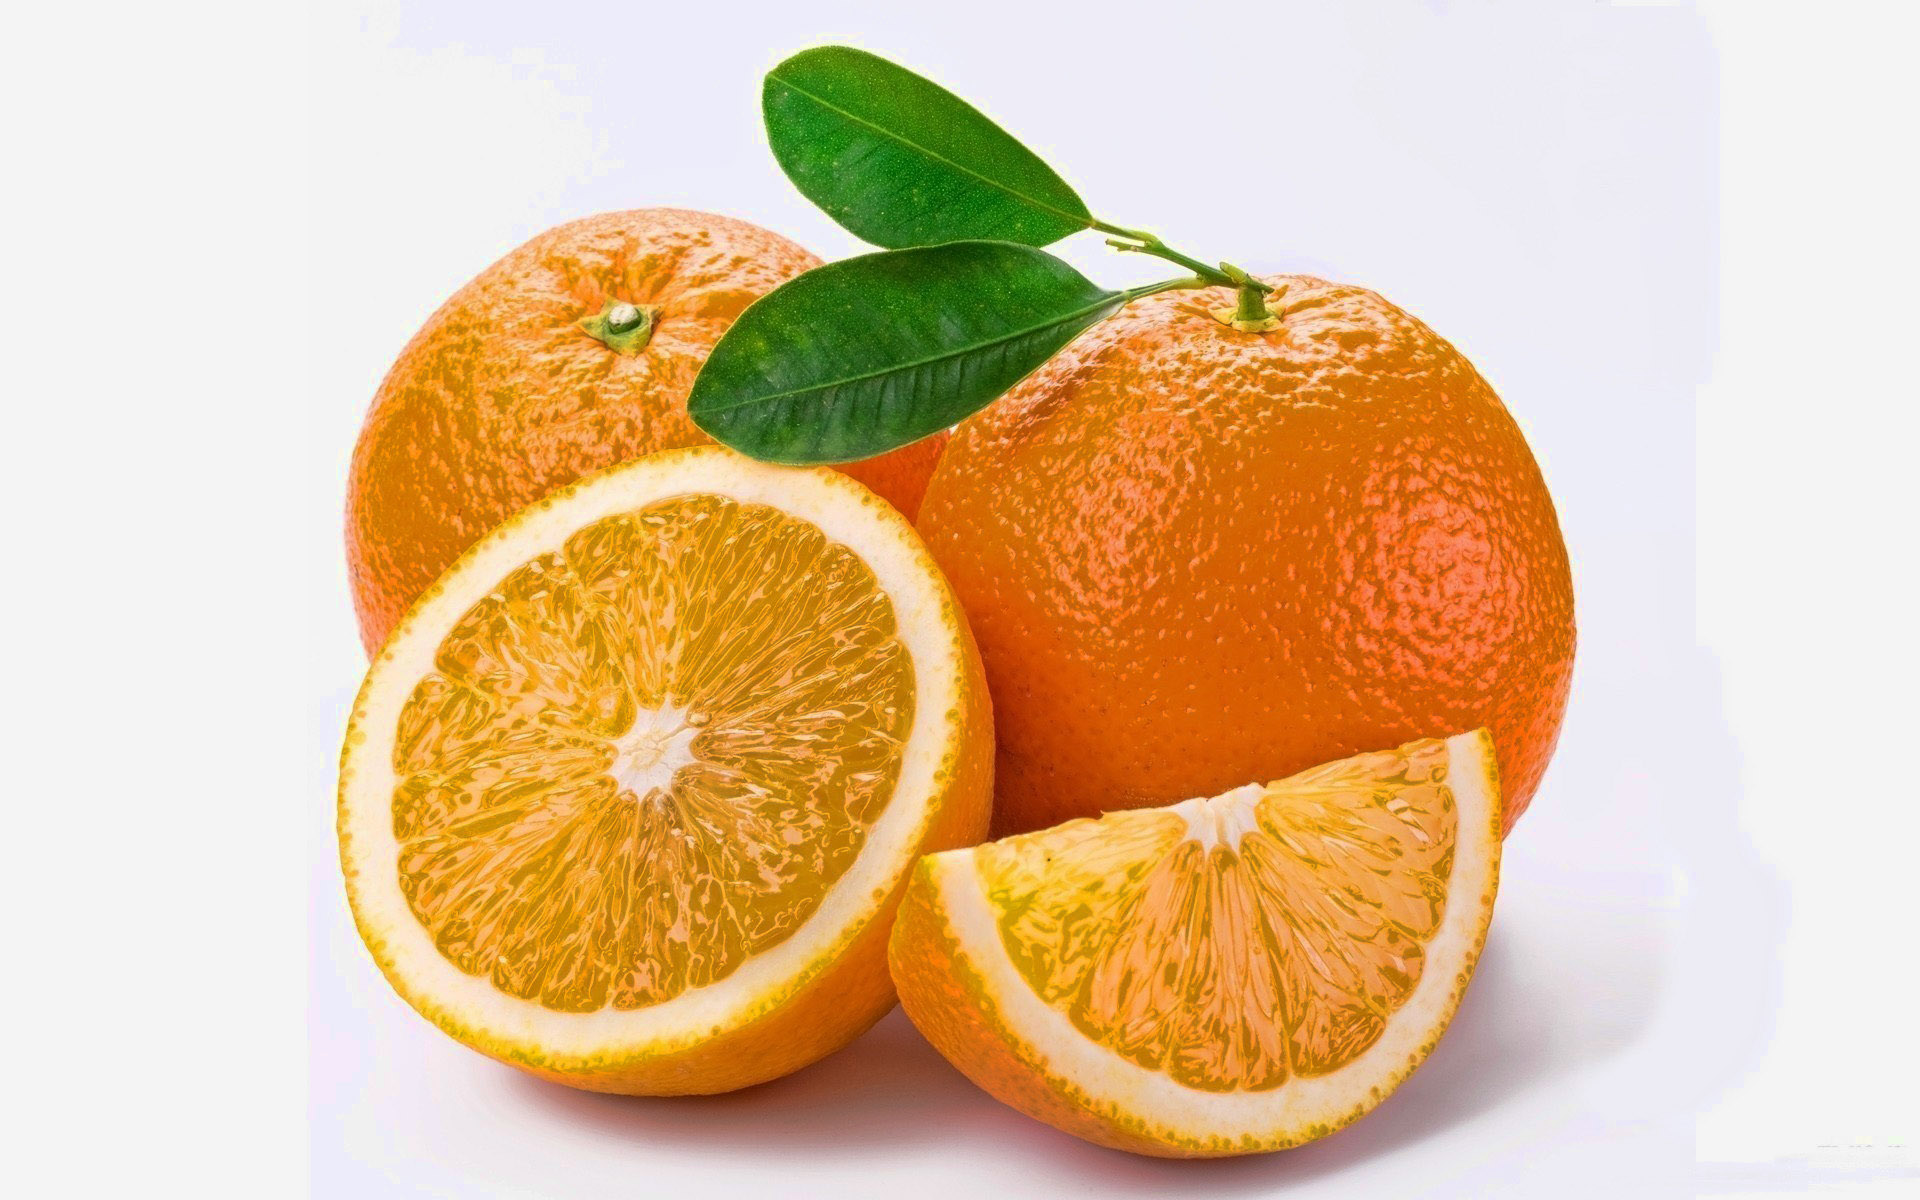 Wallpapers orange slices citrus on the desktop